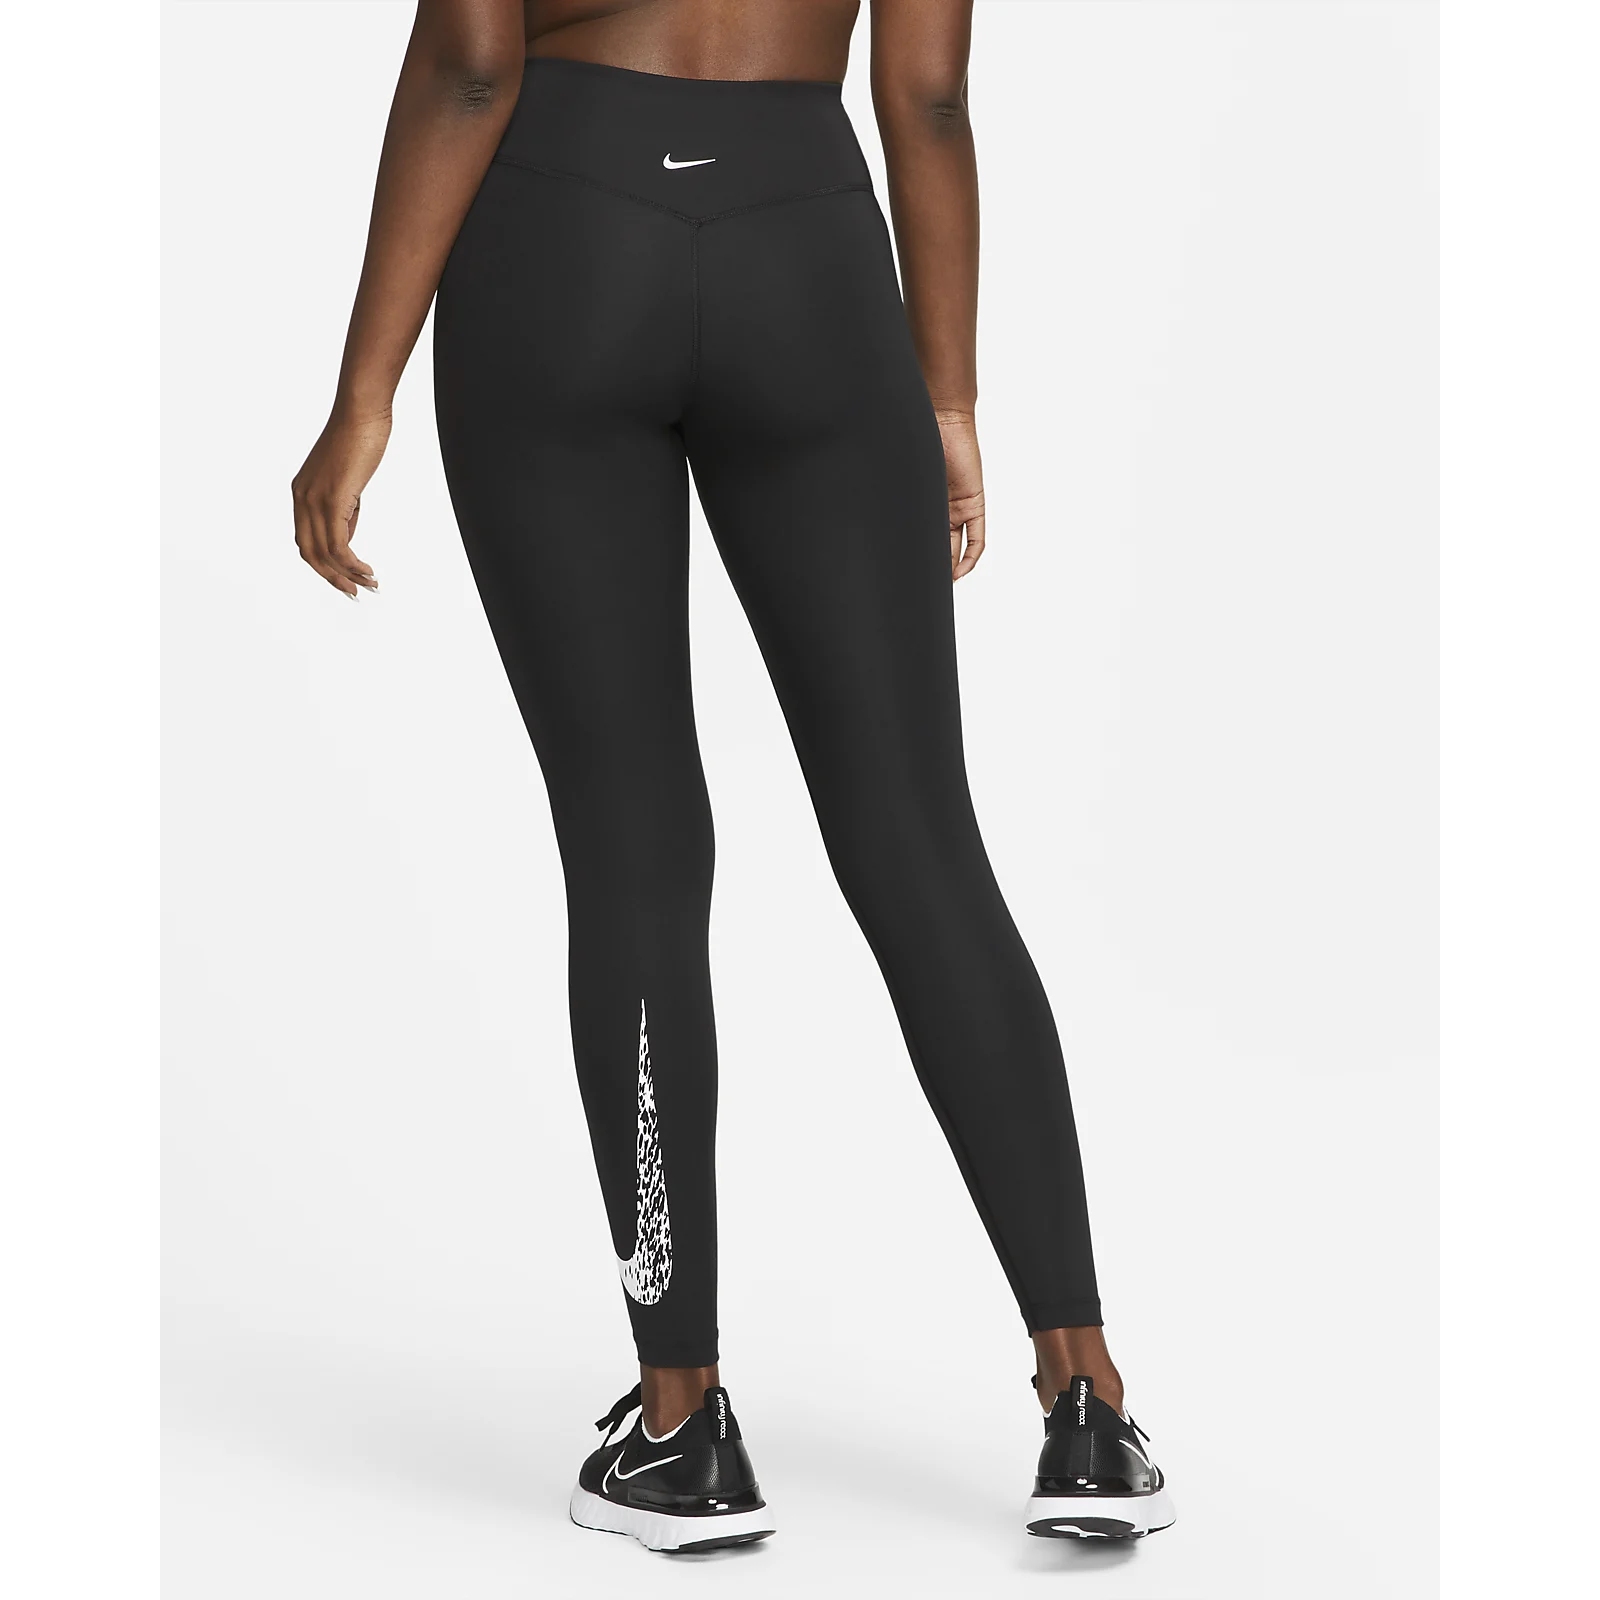 Nike Women's Swoosh Run Leggings - Black/Reflective Silver